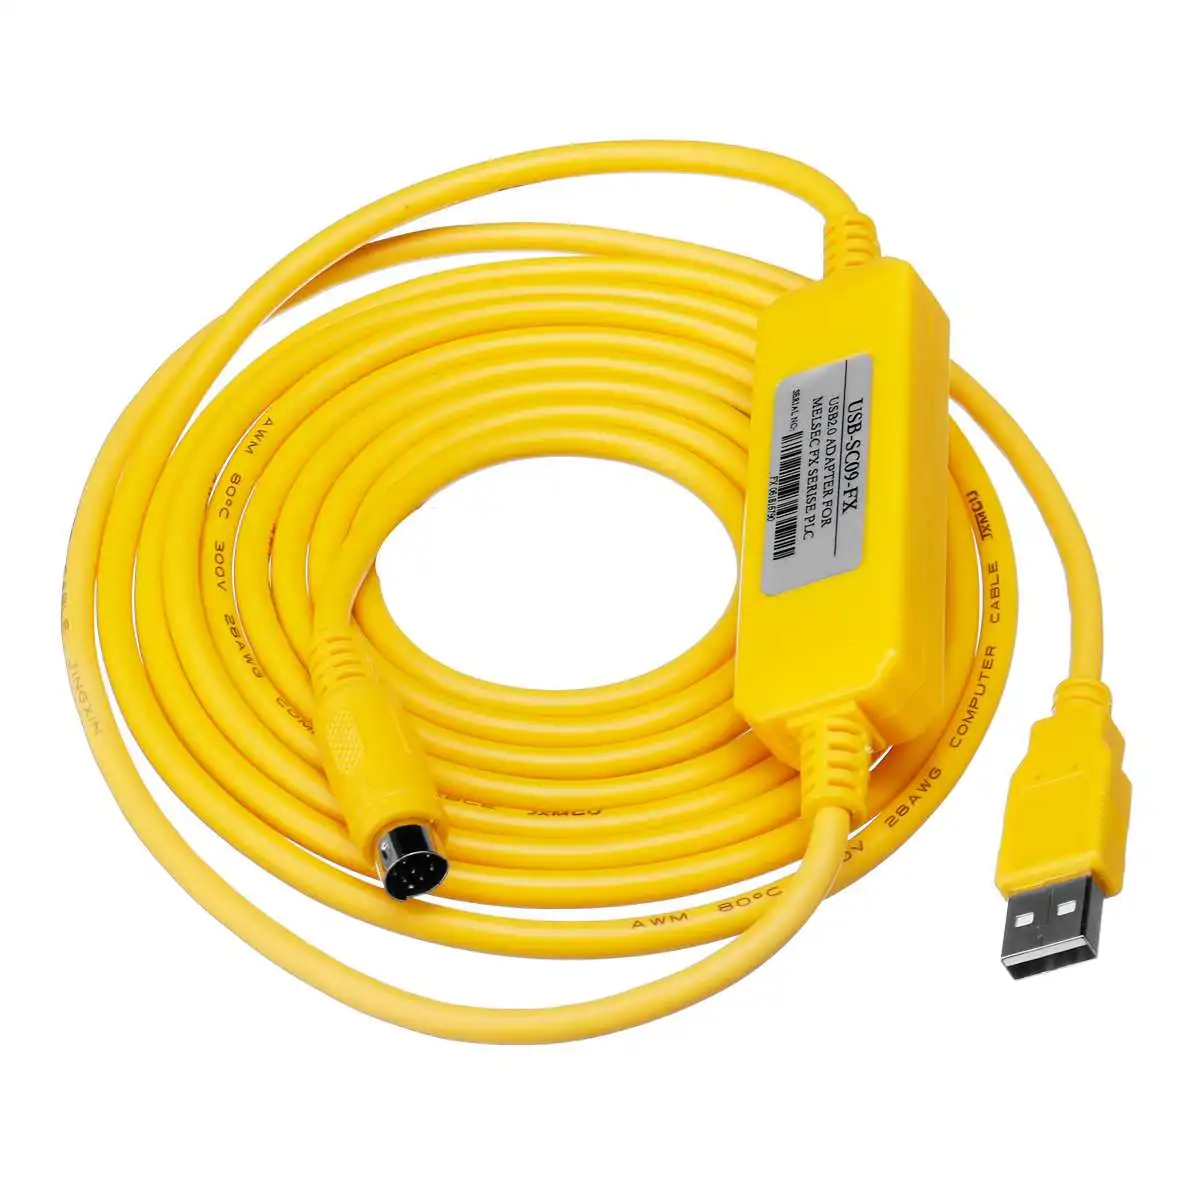 PLC Programming USB SC09 FX Cable For Mitsubishi MELSEC RS422 SC-09 000554 